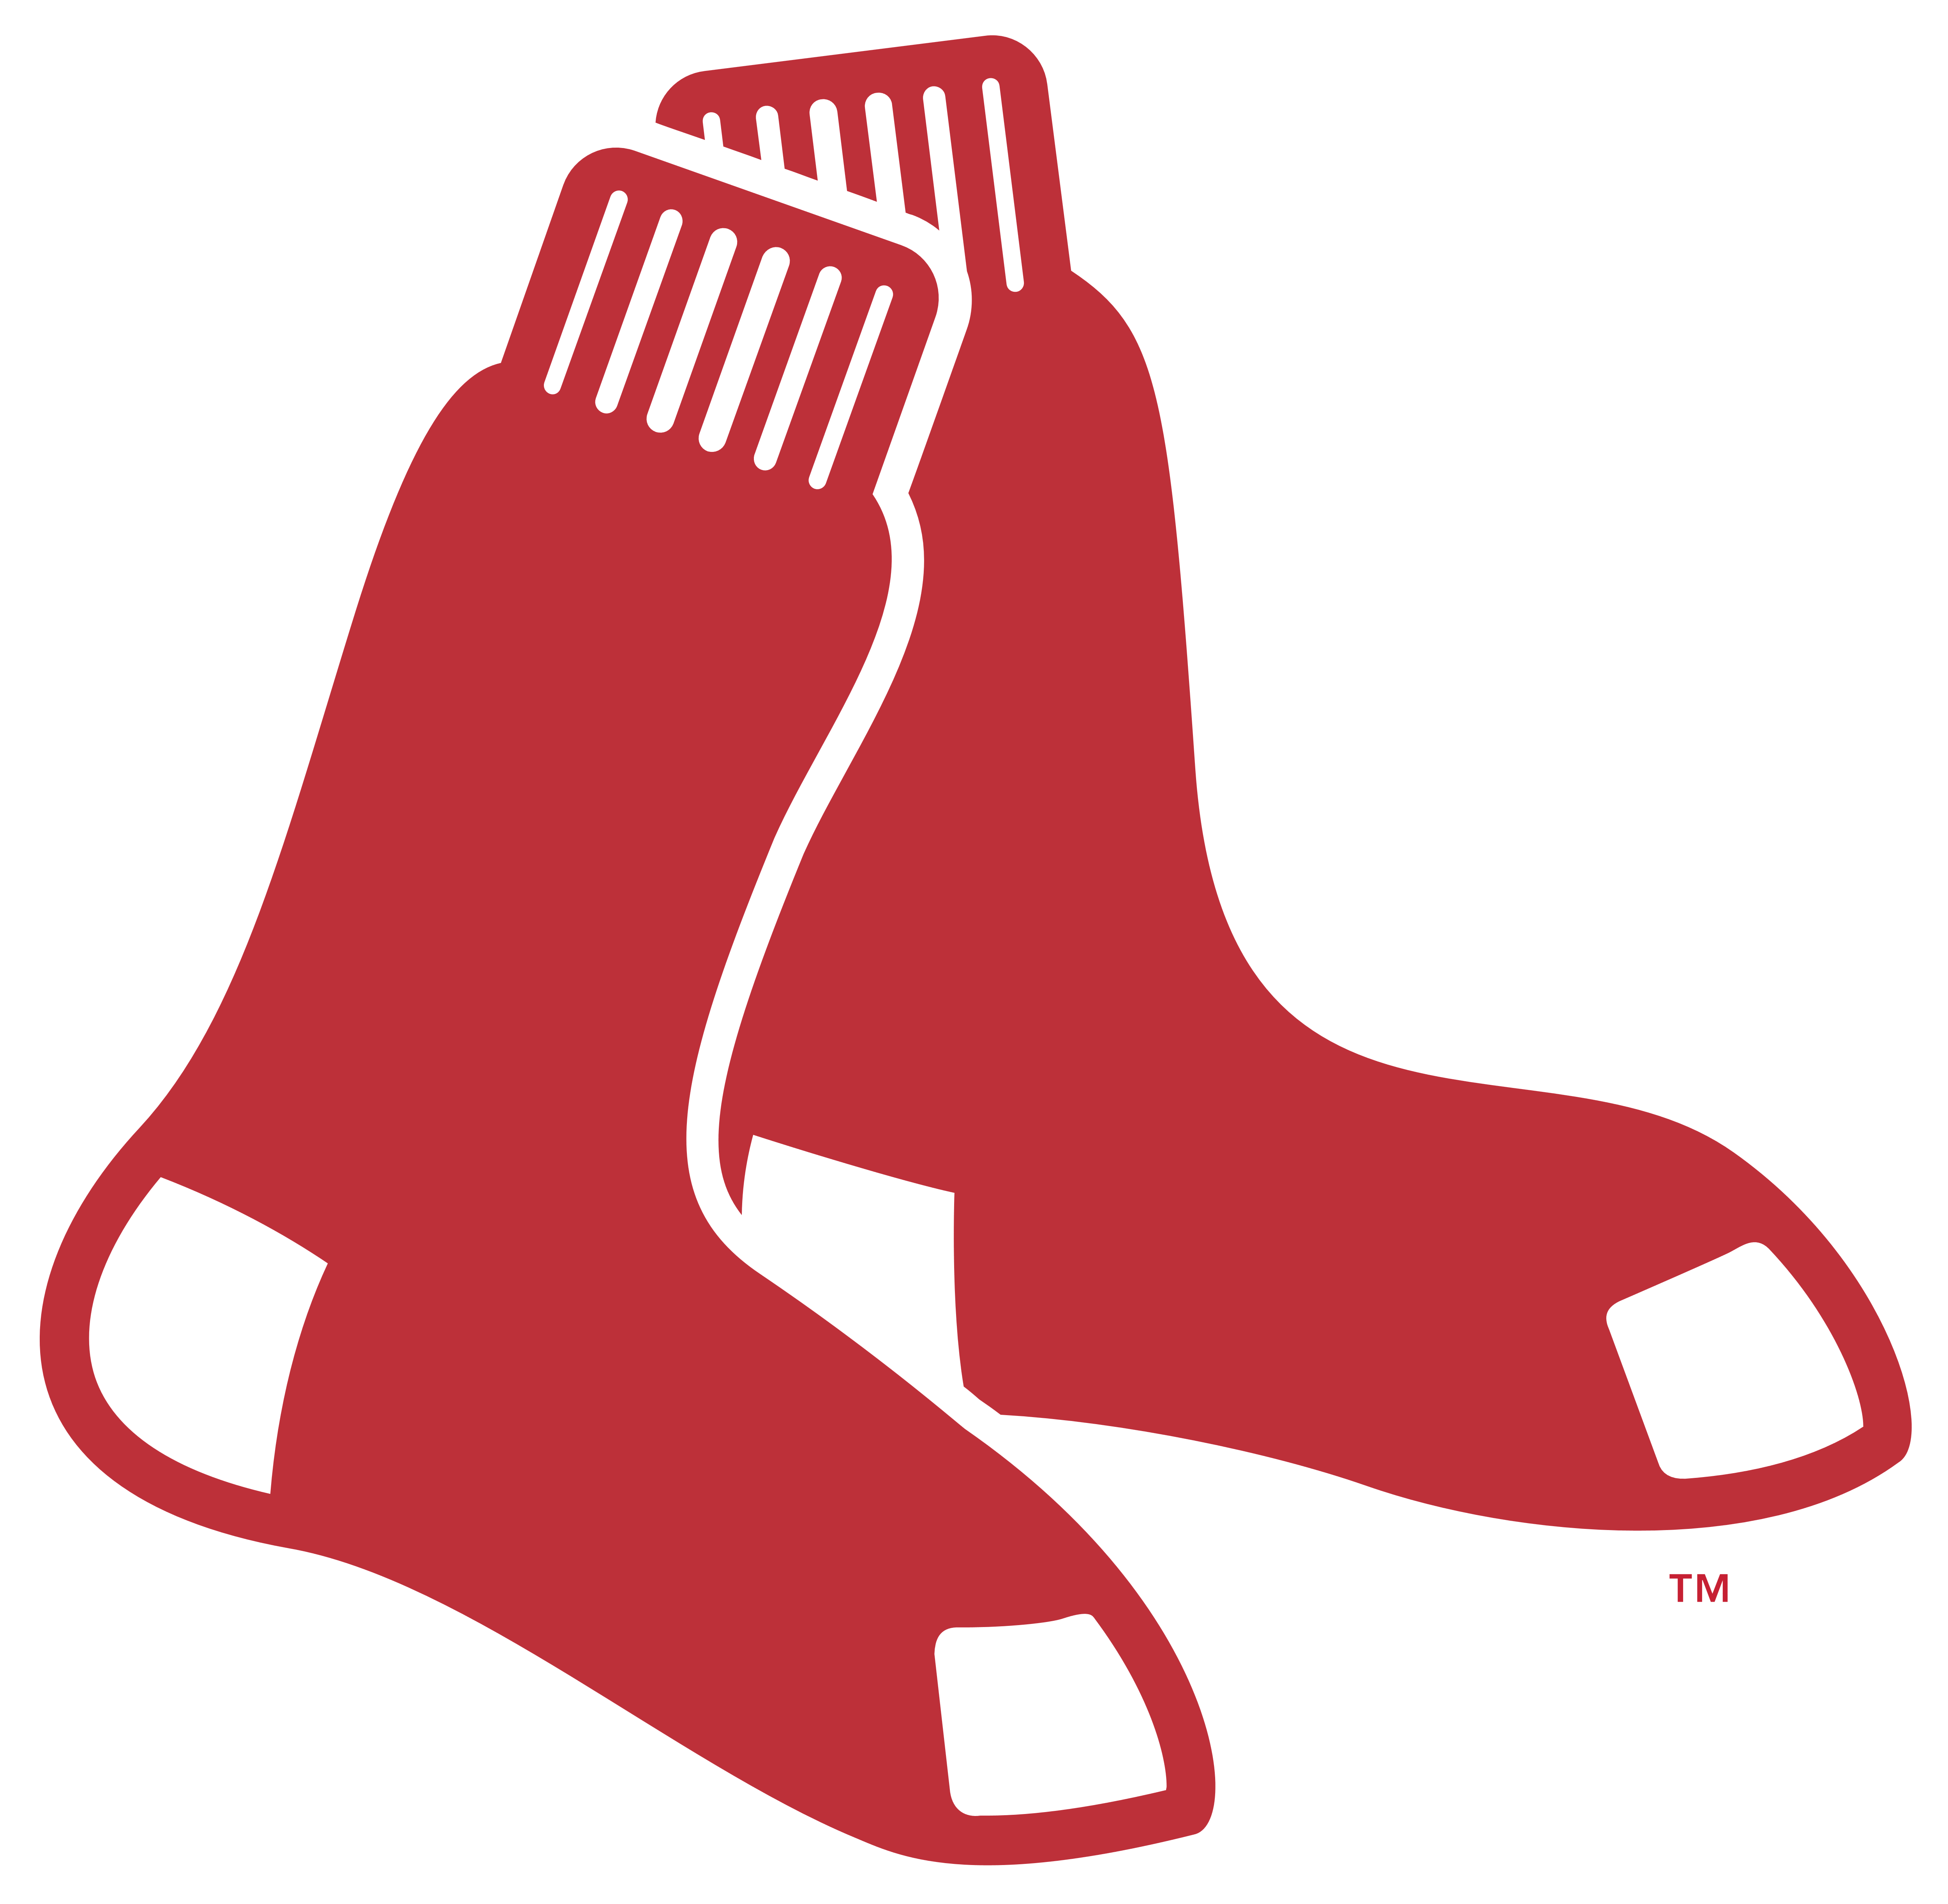 Boston Red Soxs Statistics